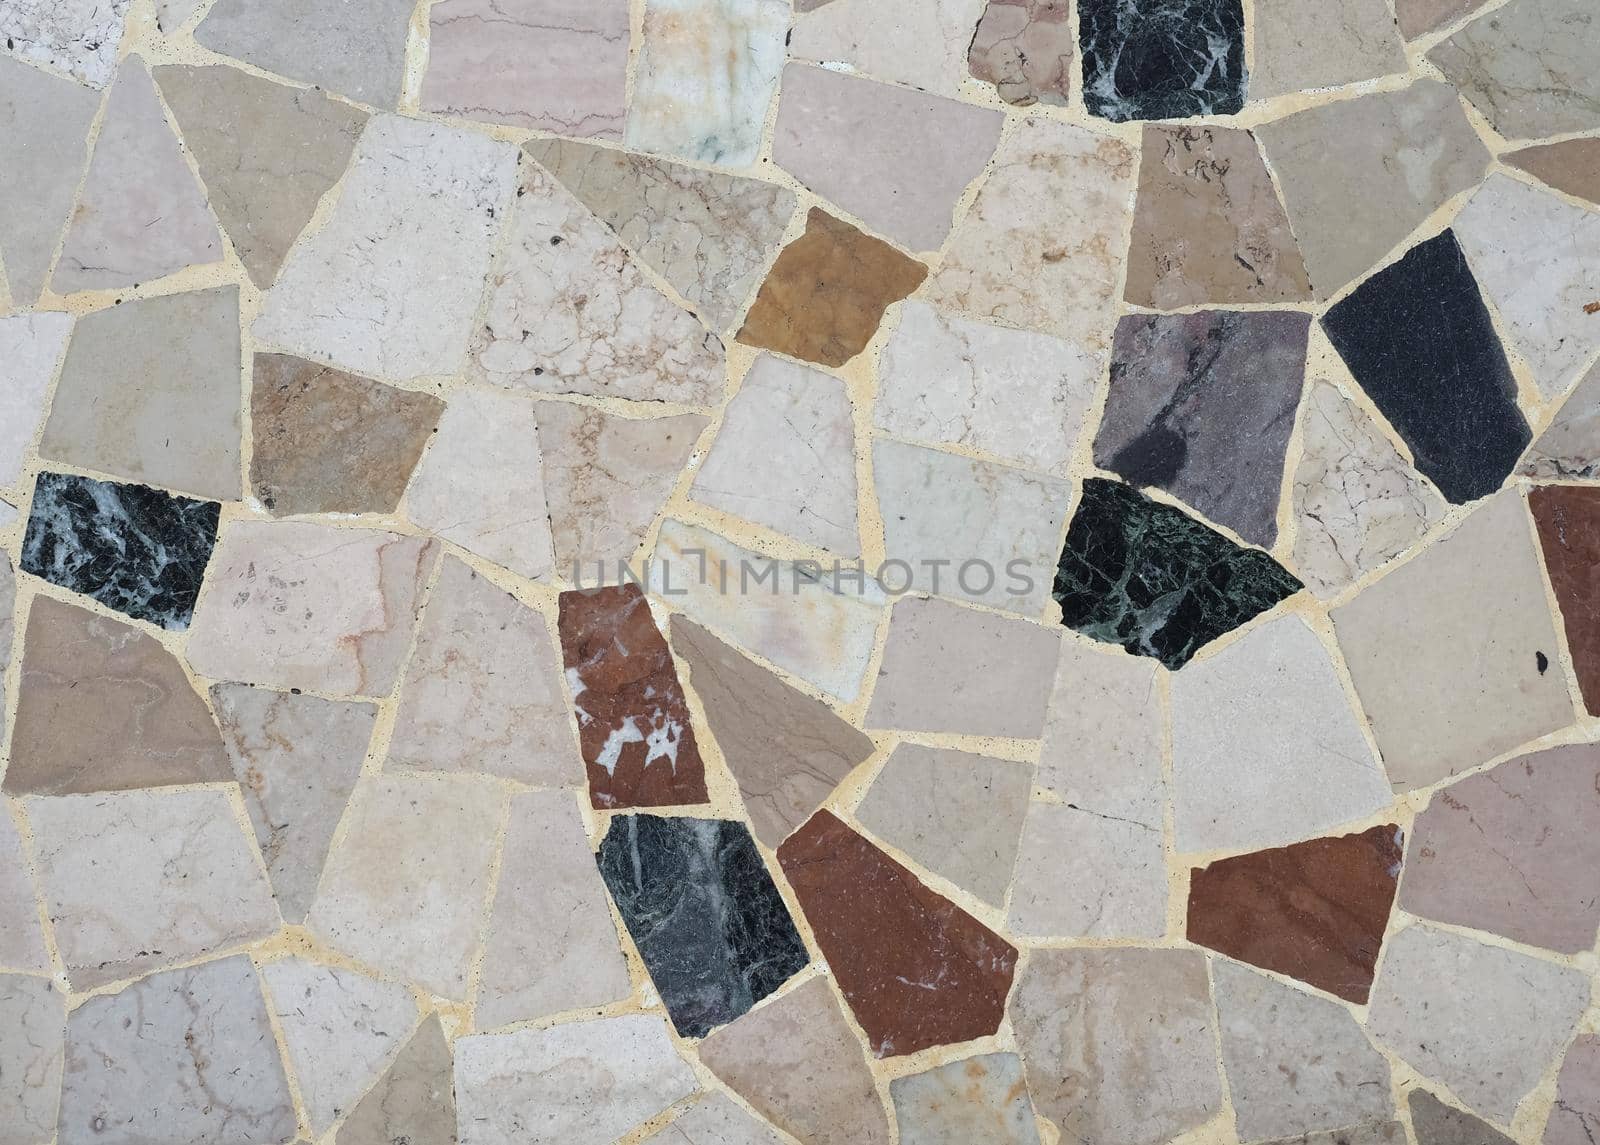 opus incertum irregular work tiled marble floor texture useful as a background